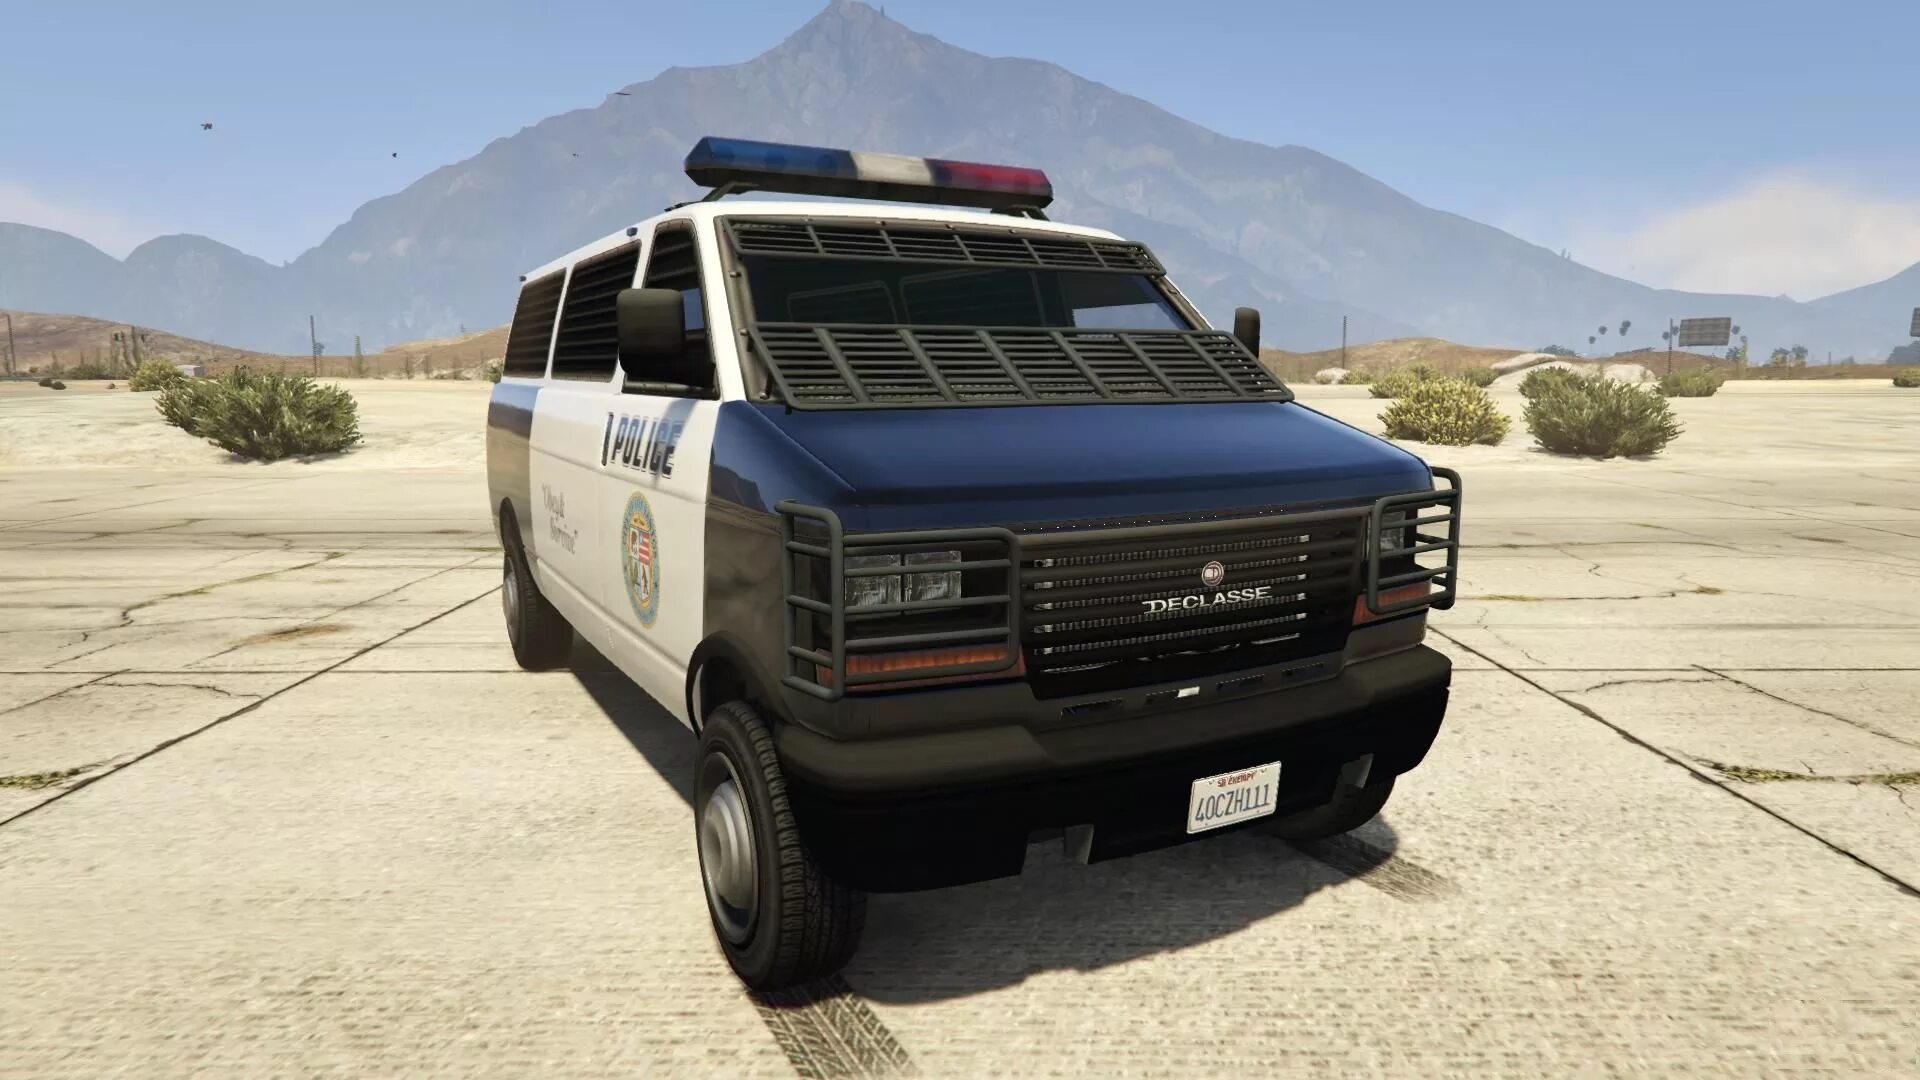 Игра машина gta 5. Declasse Police Transporter GTA 5. GTA 5 Police van. GTA 5 фургон LAPD. Фургон Declasse GTA 5.